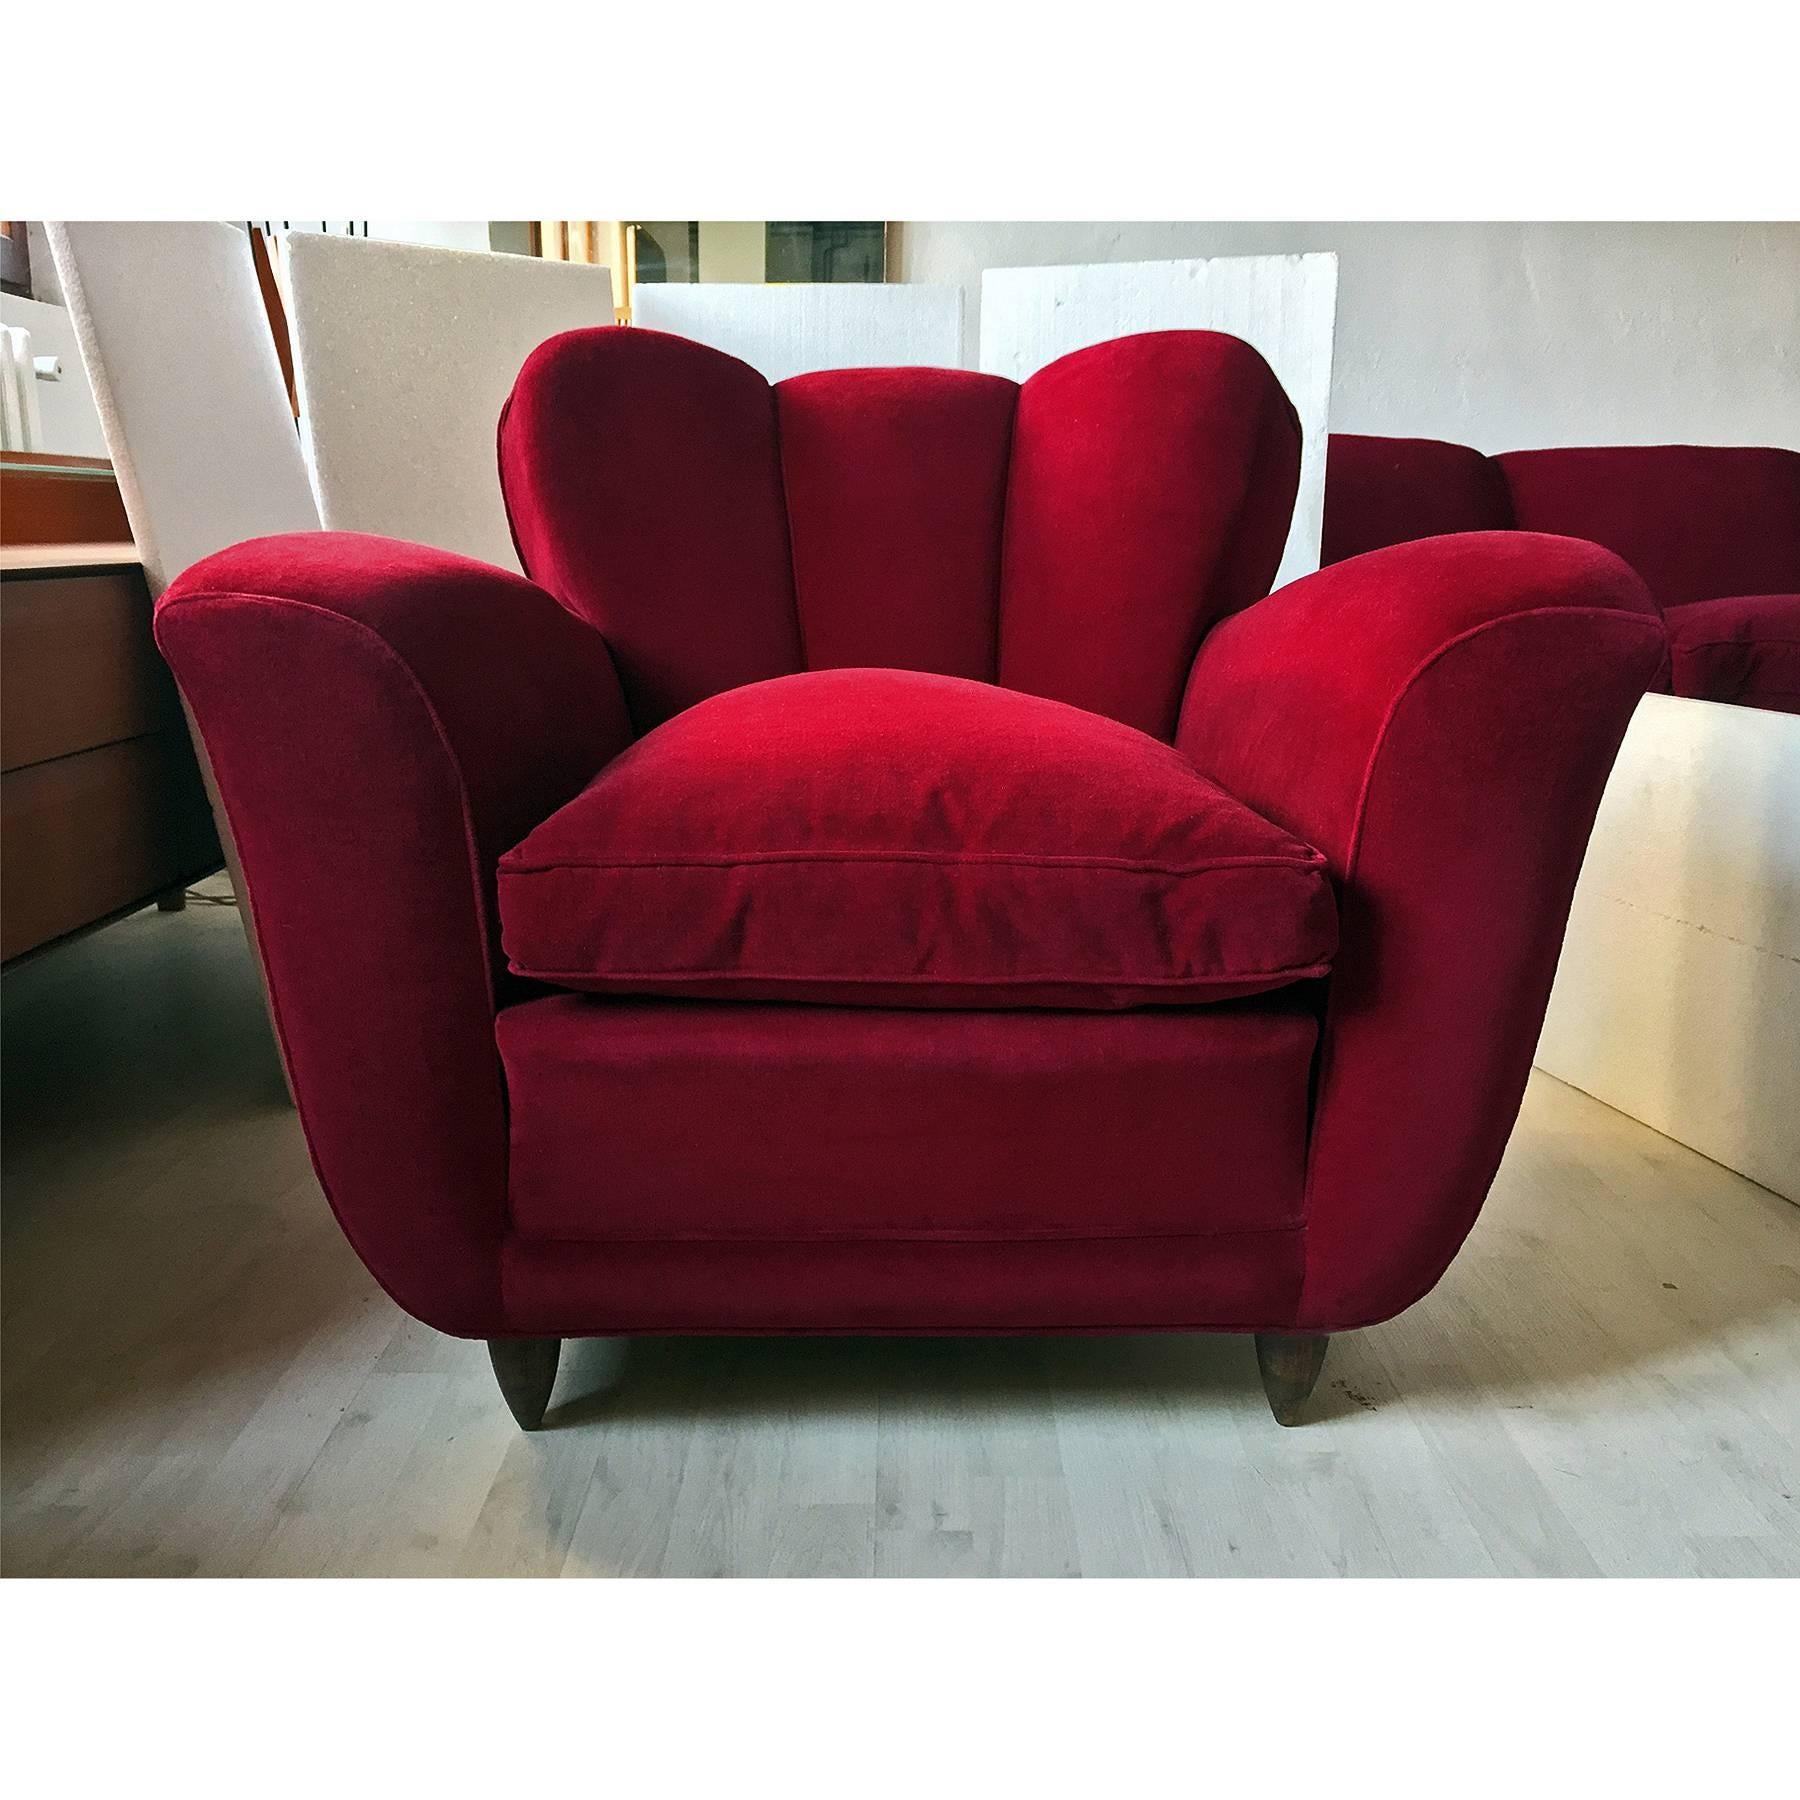 Mid-Century Modern Italian Armchairs Red Velvet attributable to Guglielmo Ulrich, 1950s, Set of 2